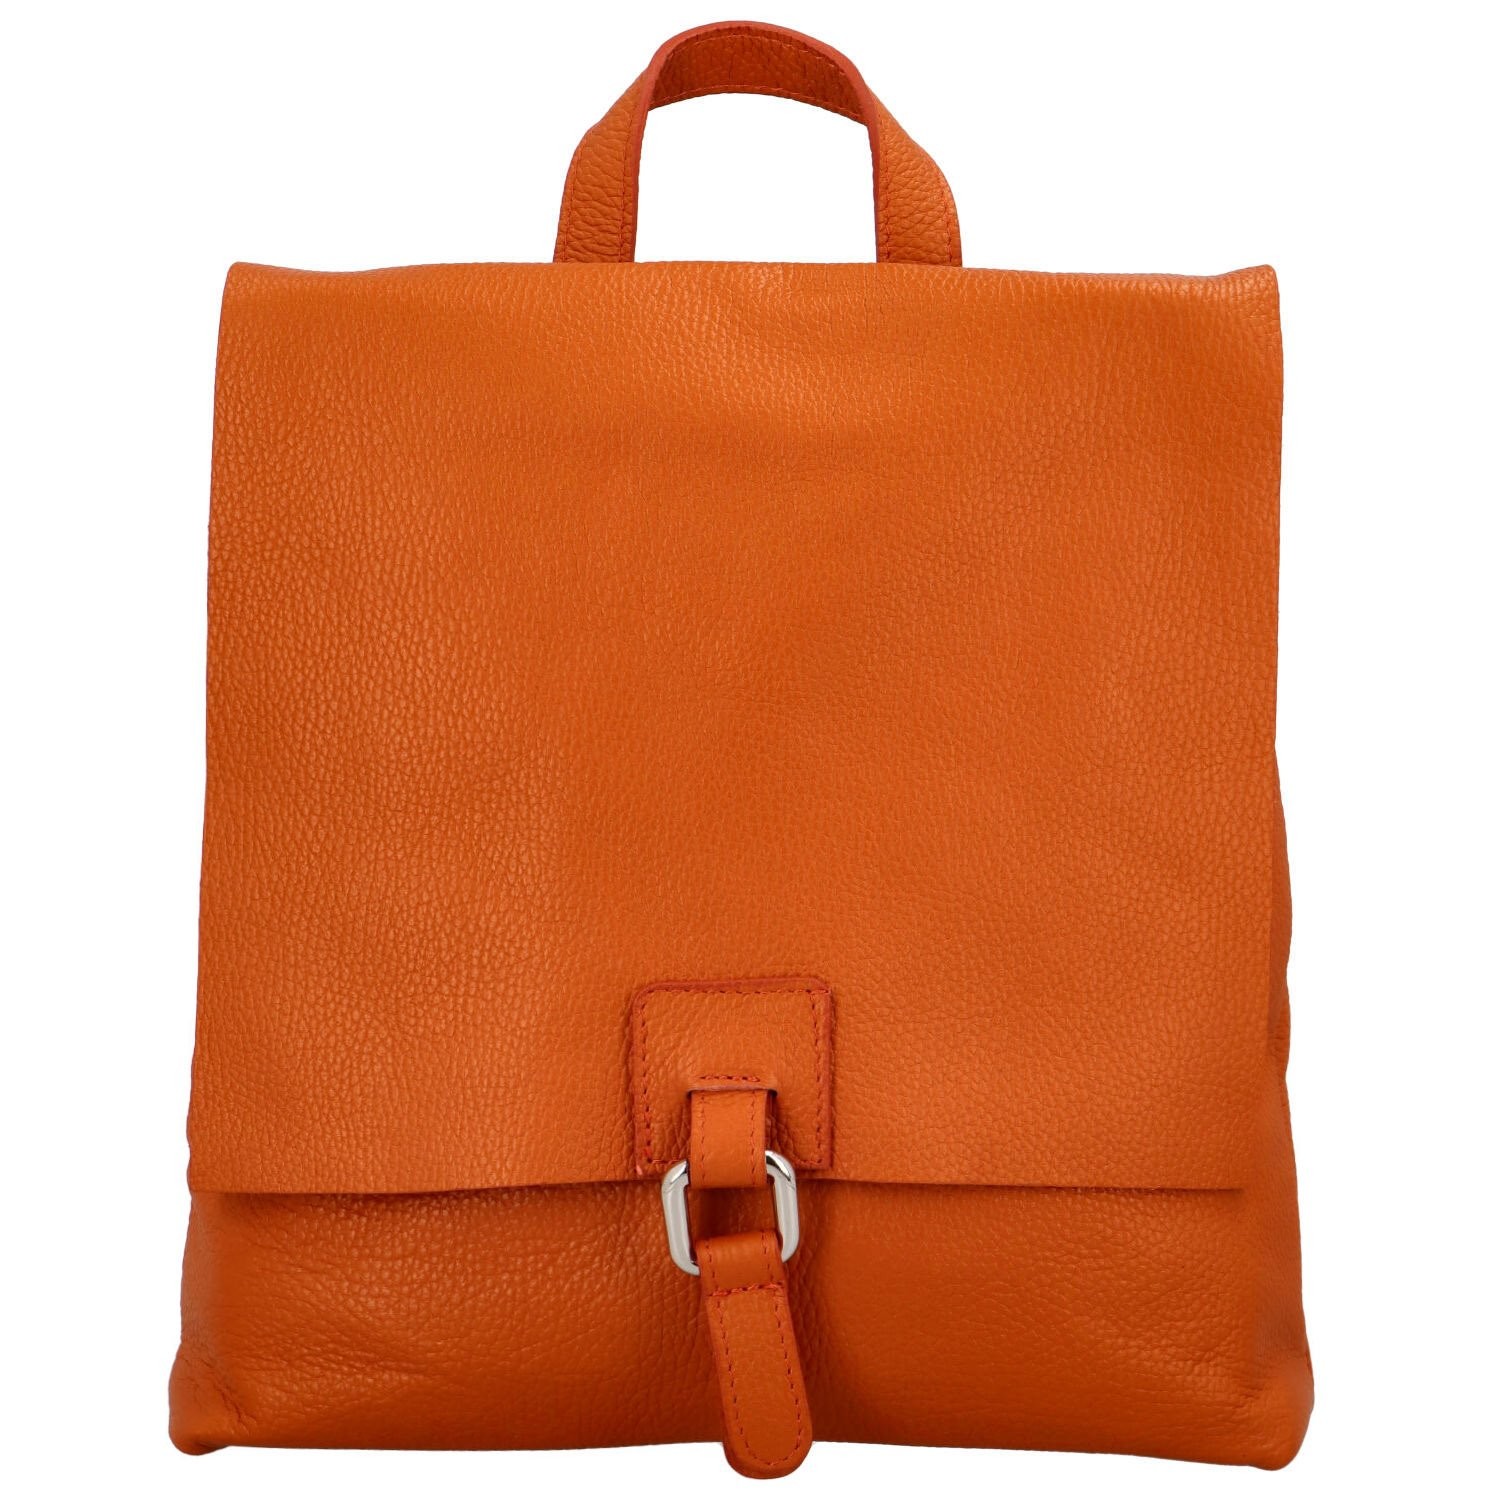 Dámský kožený batůžek/kabelka oranžový - Delami Vera Pelle Francesco oranžová